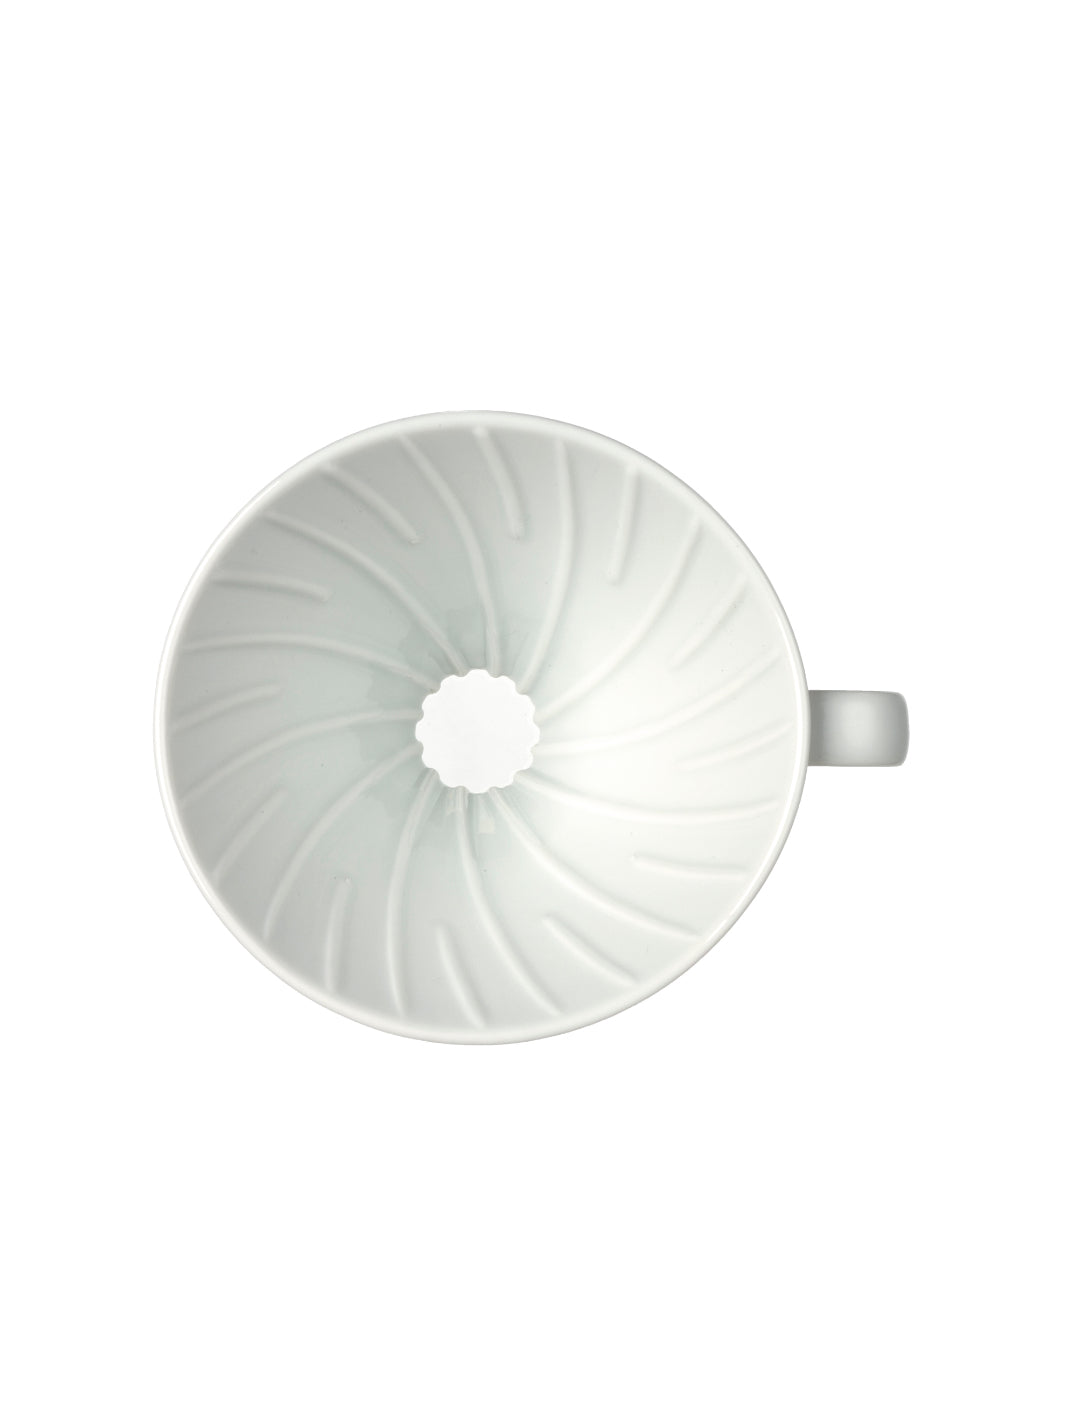 HARIO V60-02 Ceramic Dripper Set (White) – Hario Canada